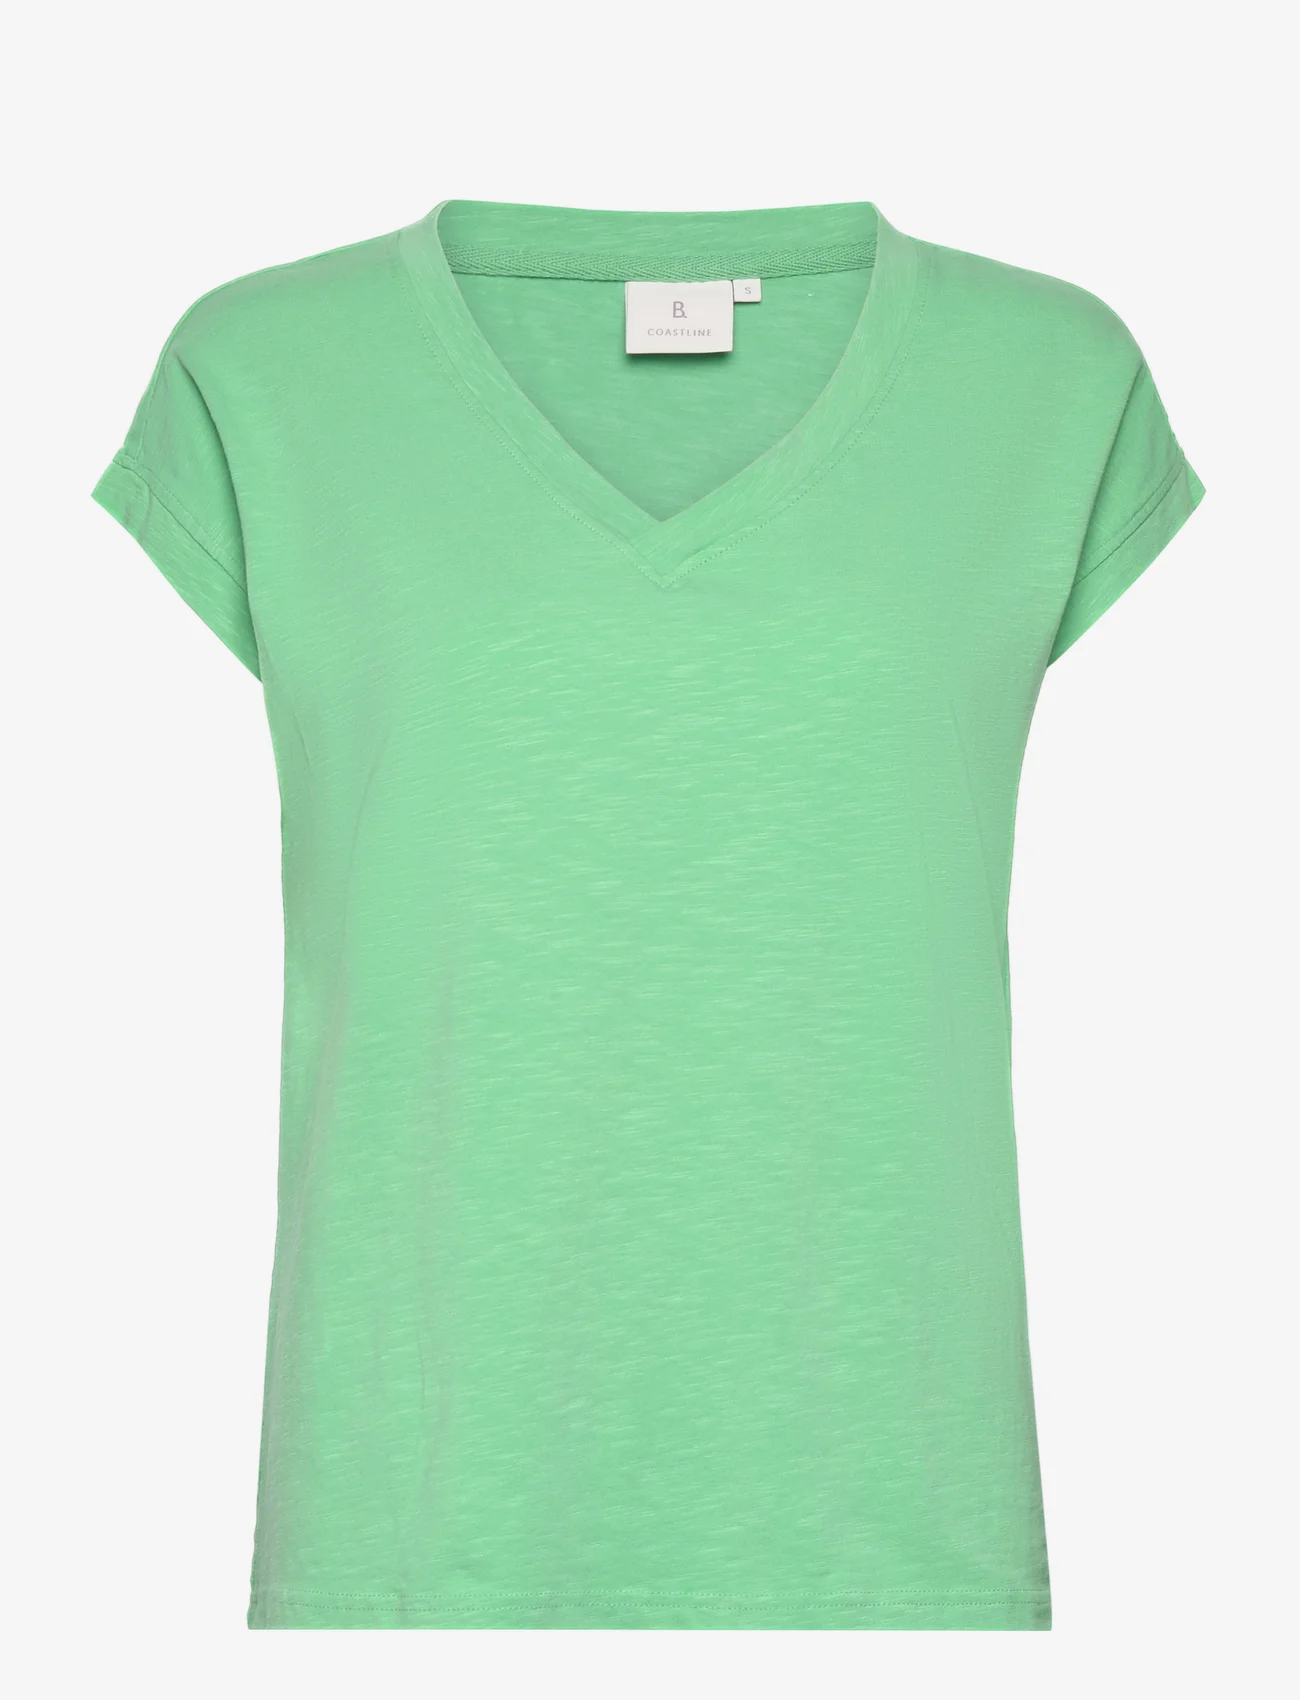 Brandtex - B. COASTLINE T-shirt s/s - light grass green - 0